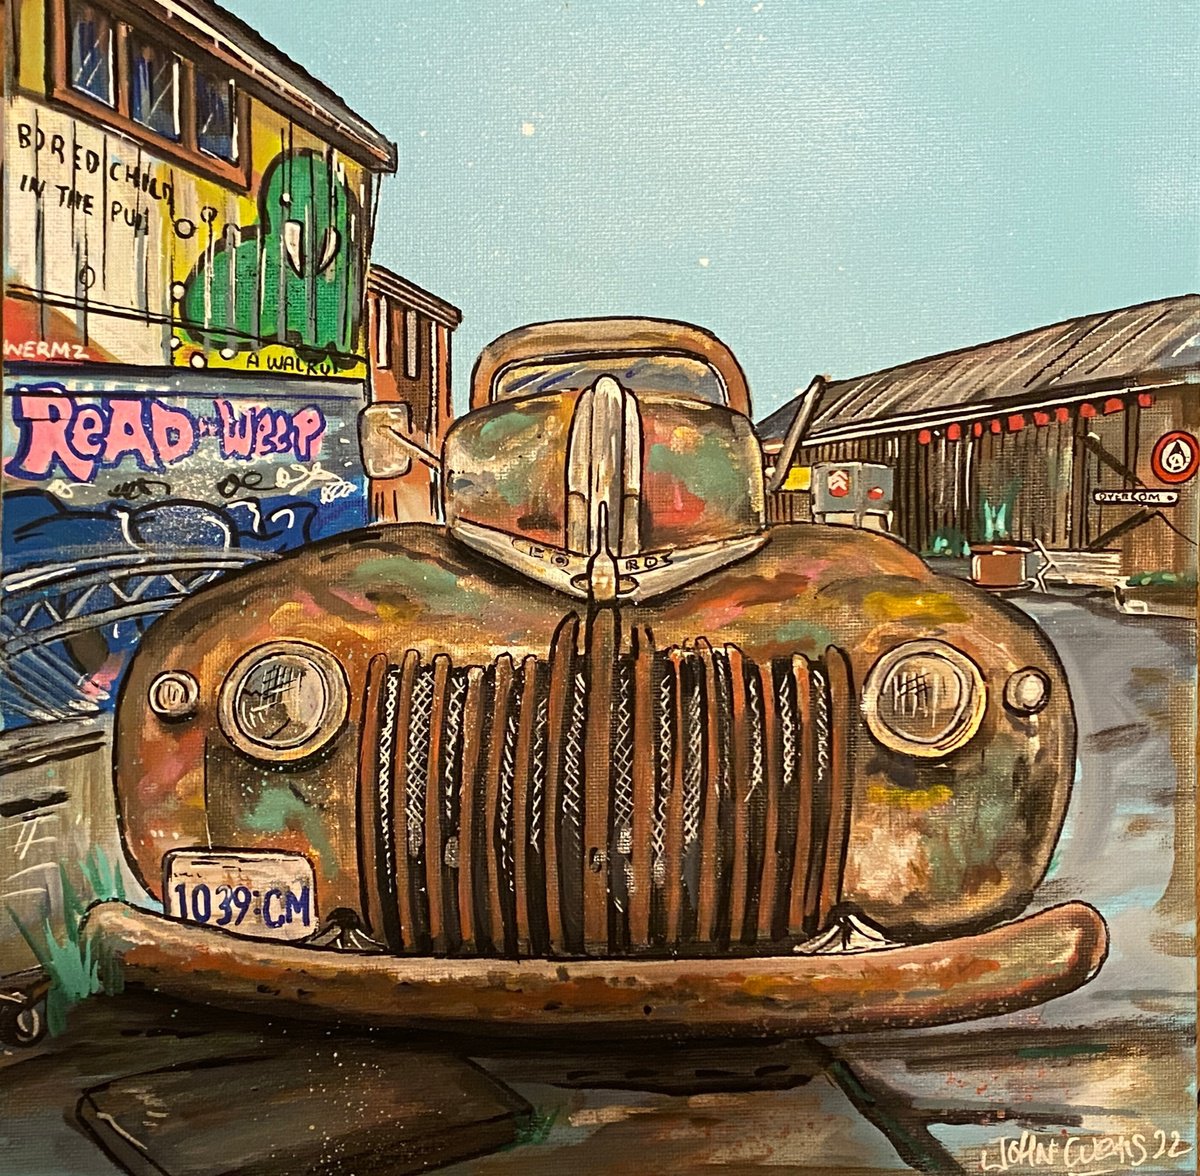 Rusty - Original on canvas board by John Curtis